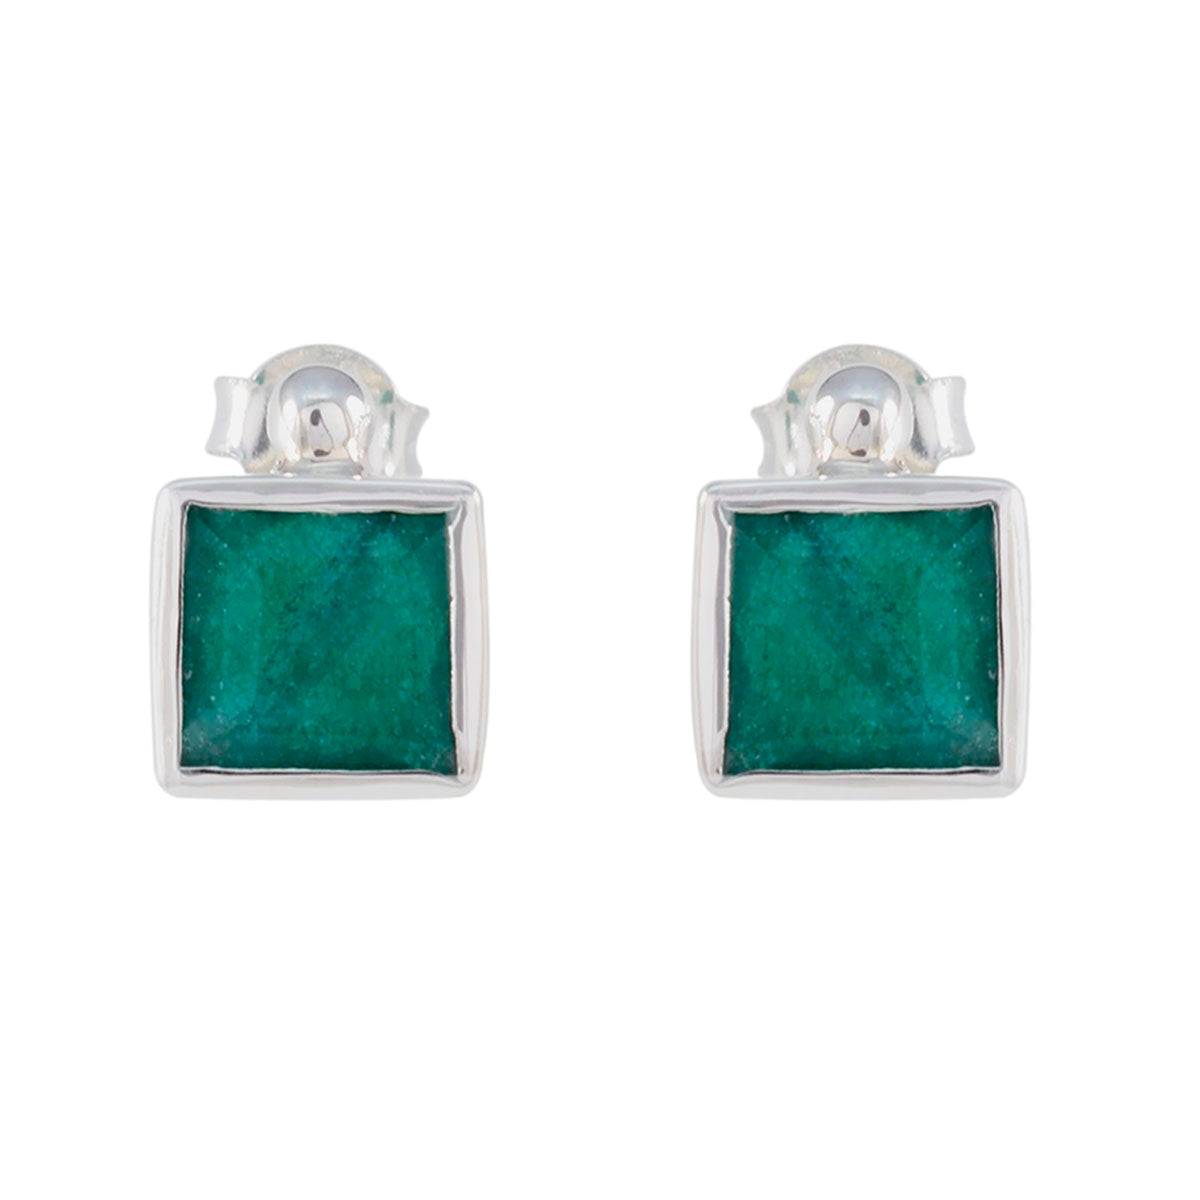 Riyo Charmanter 925er Sterlingsilber-Ohrring für Damen, indischer Smaragd-Ohrring, Lünettenfassung, grüner Ohrring-Bolzen-Ohrring